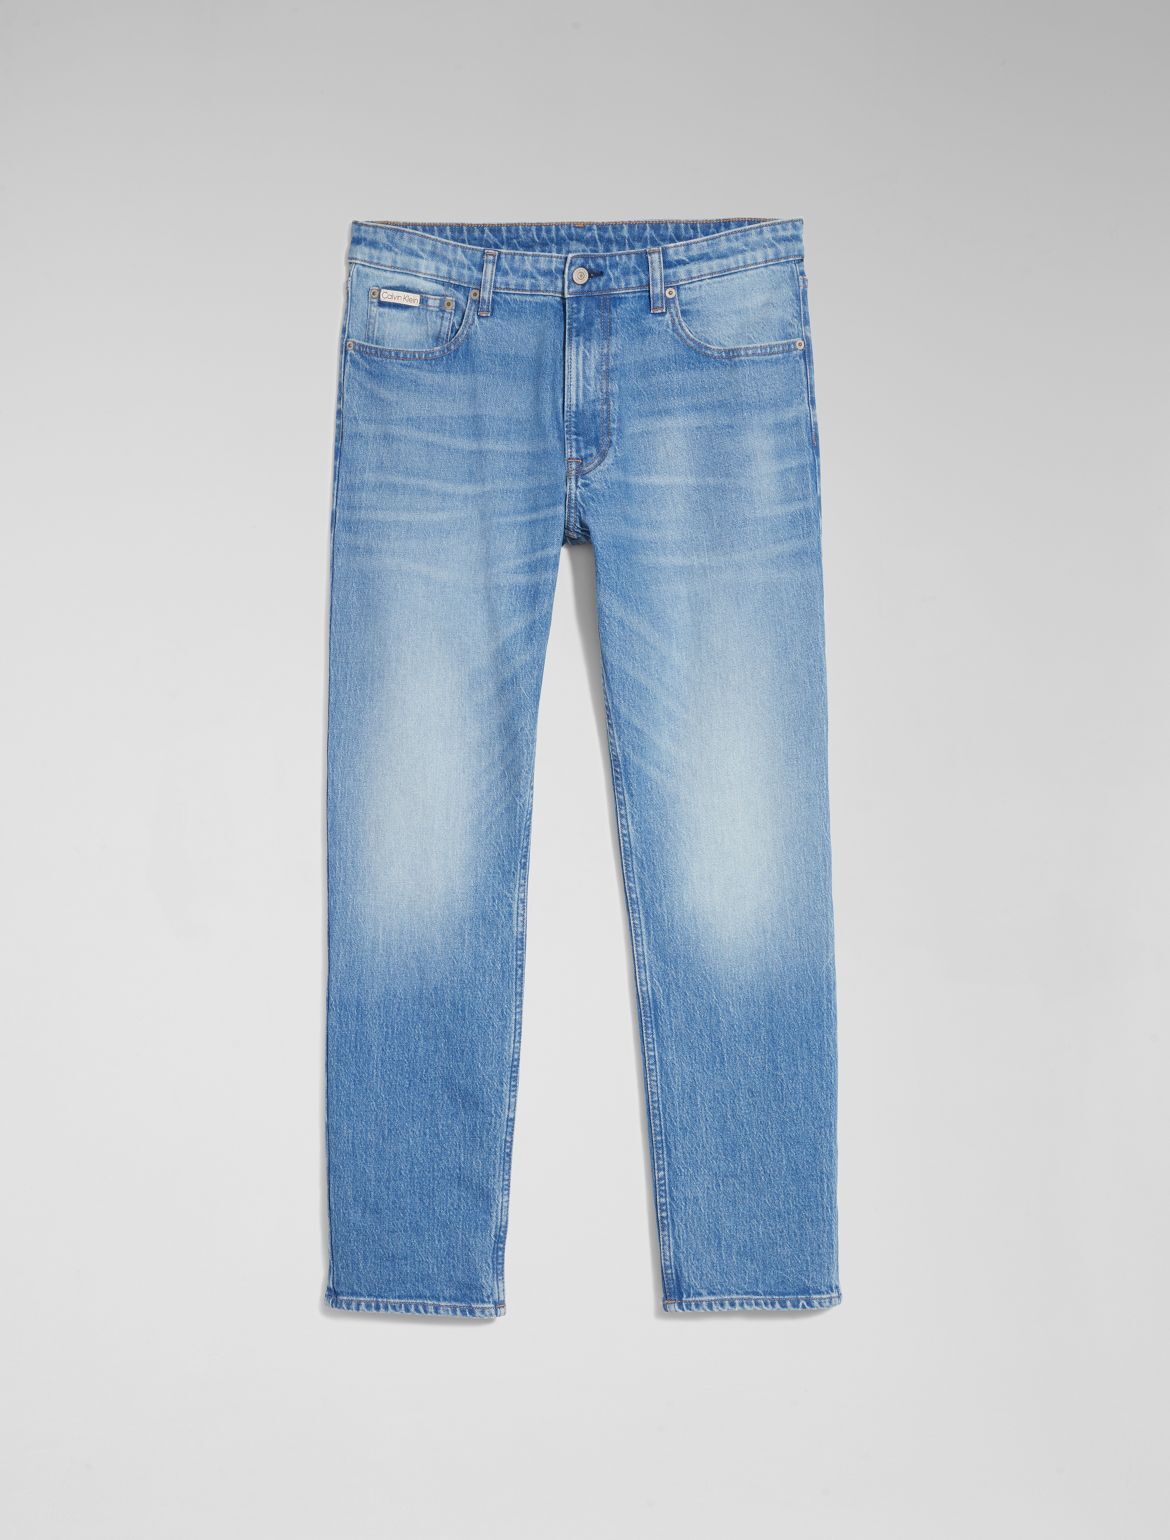 Calvin Klein Men's Slim Fit Jean - Blue - 34W x 32L